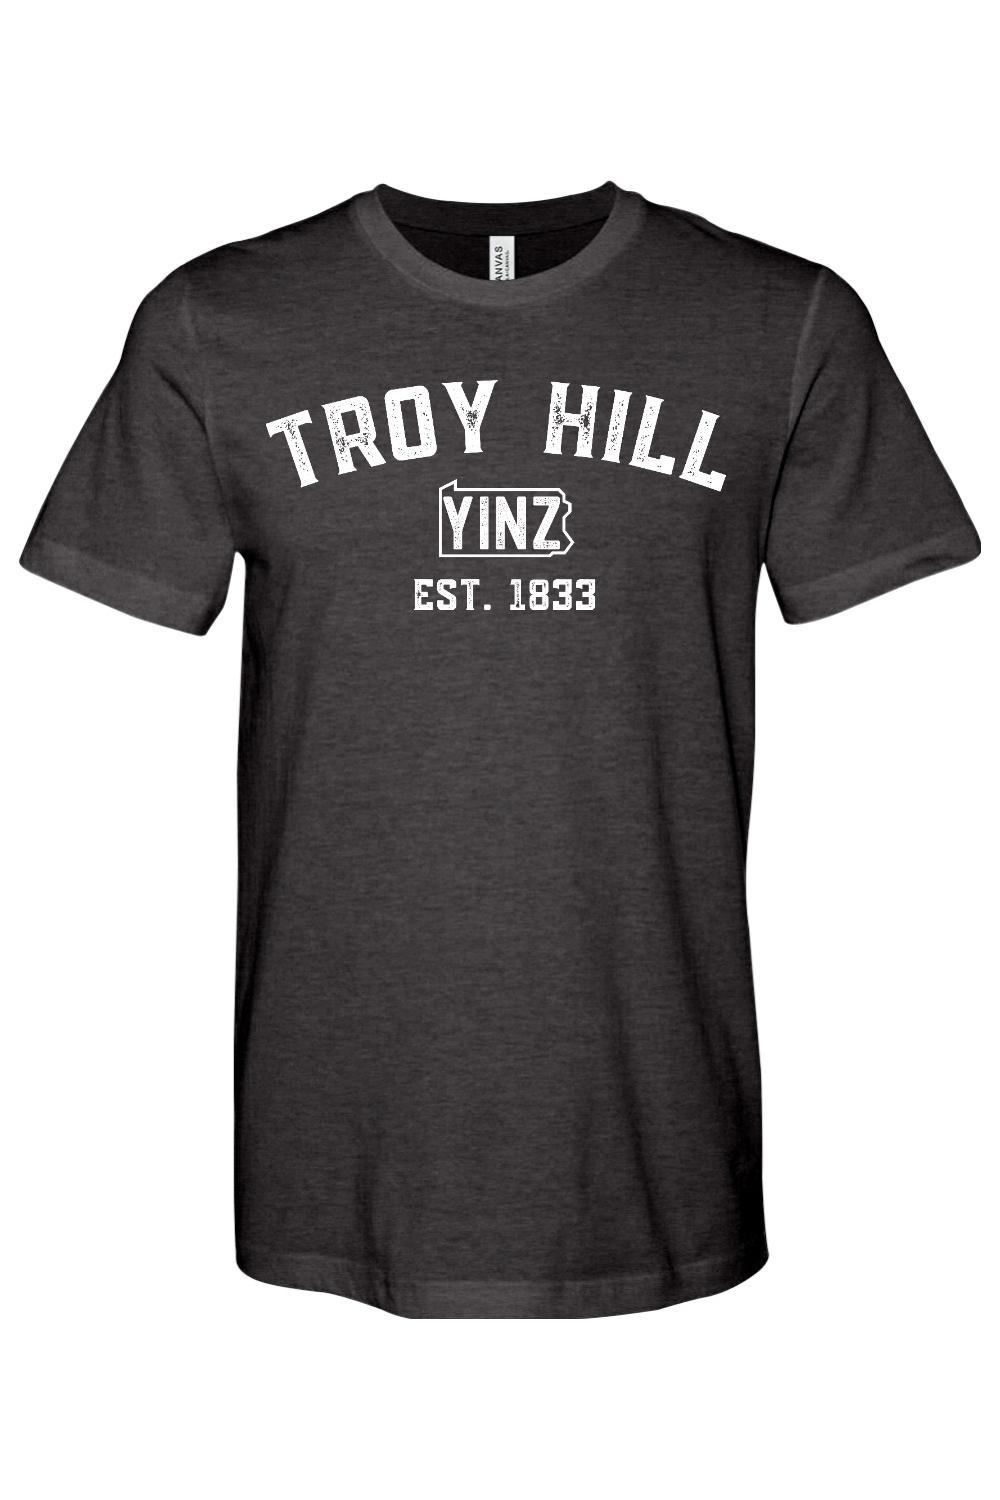 Troy Hill Yinzylvania - Yinzylvania